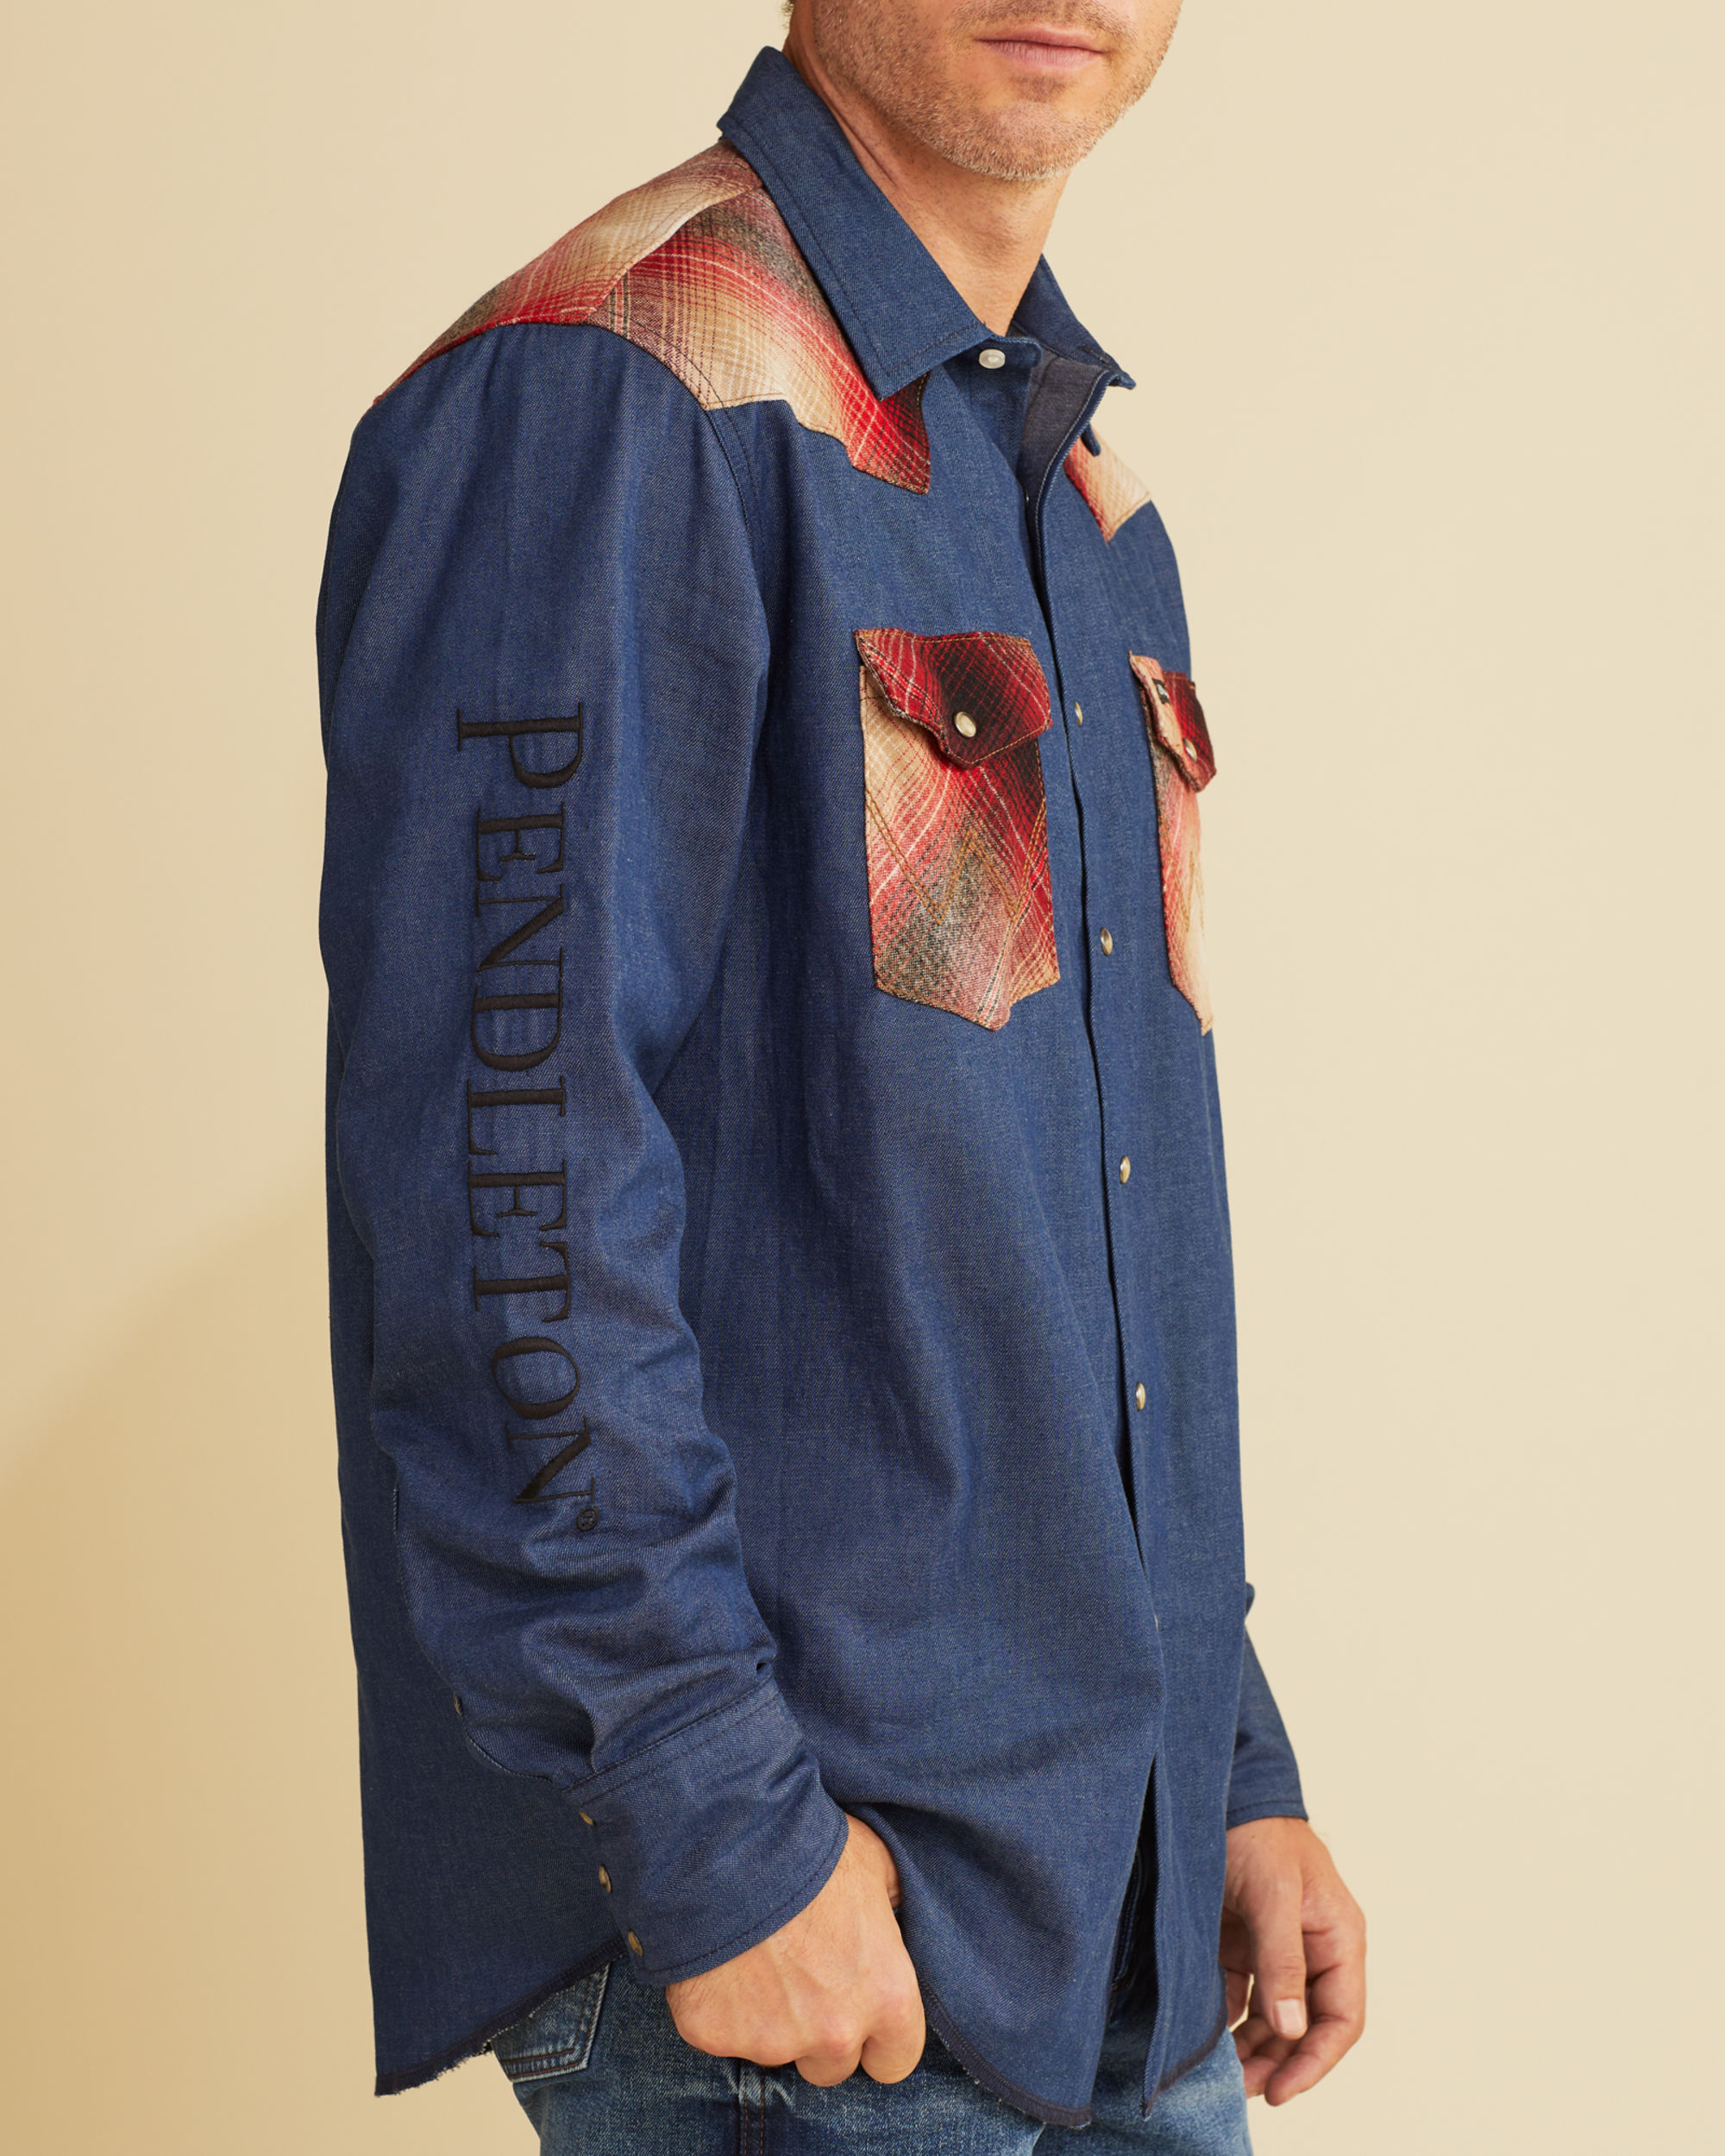 Ollysqiar Jean Jacket Patchwork Color Long Sleeve pirate shirt